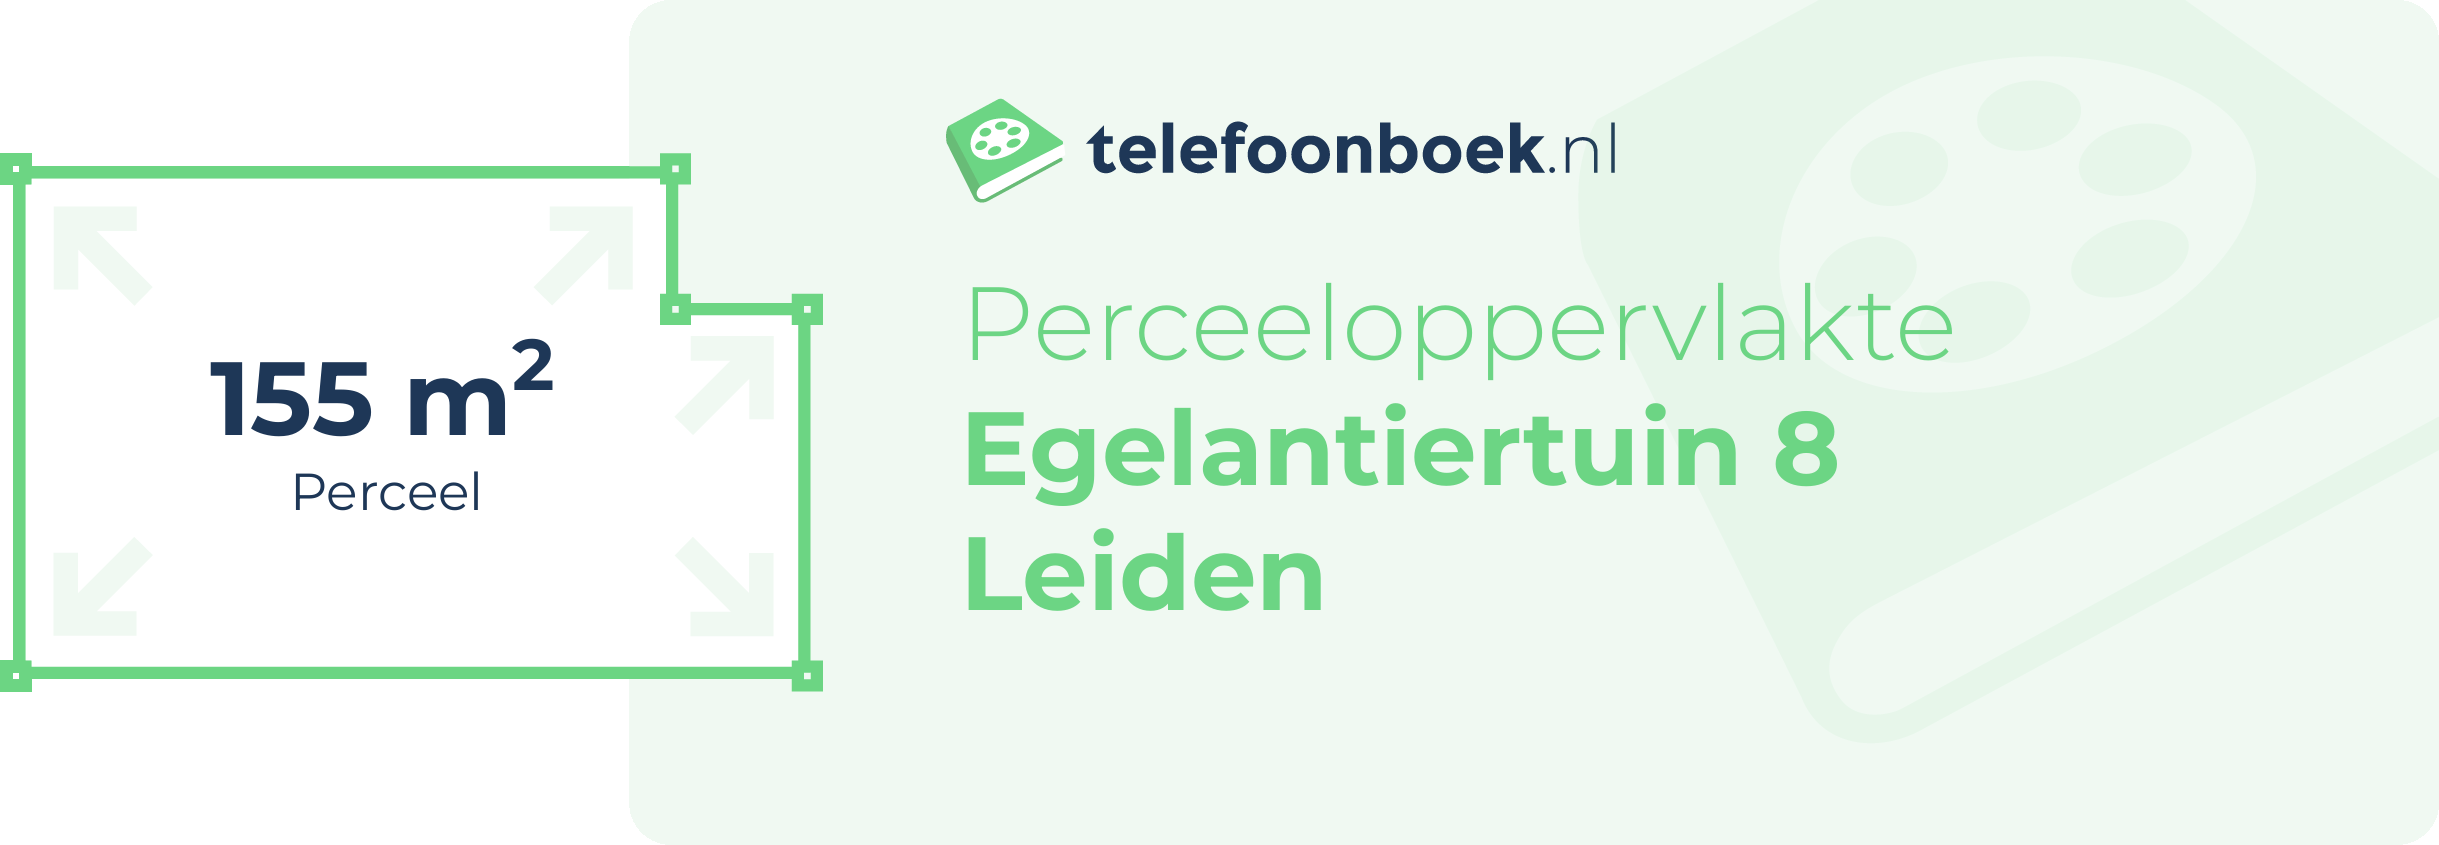 Perceeloppervlakte Egelantiertuin 8 Leiden